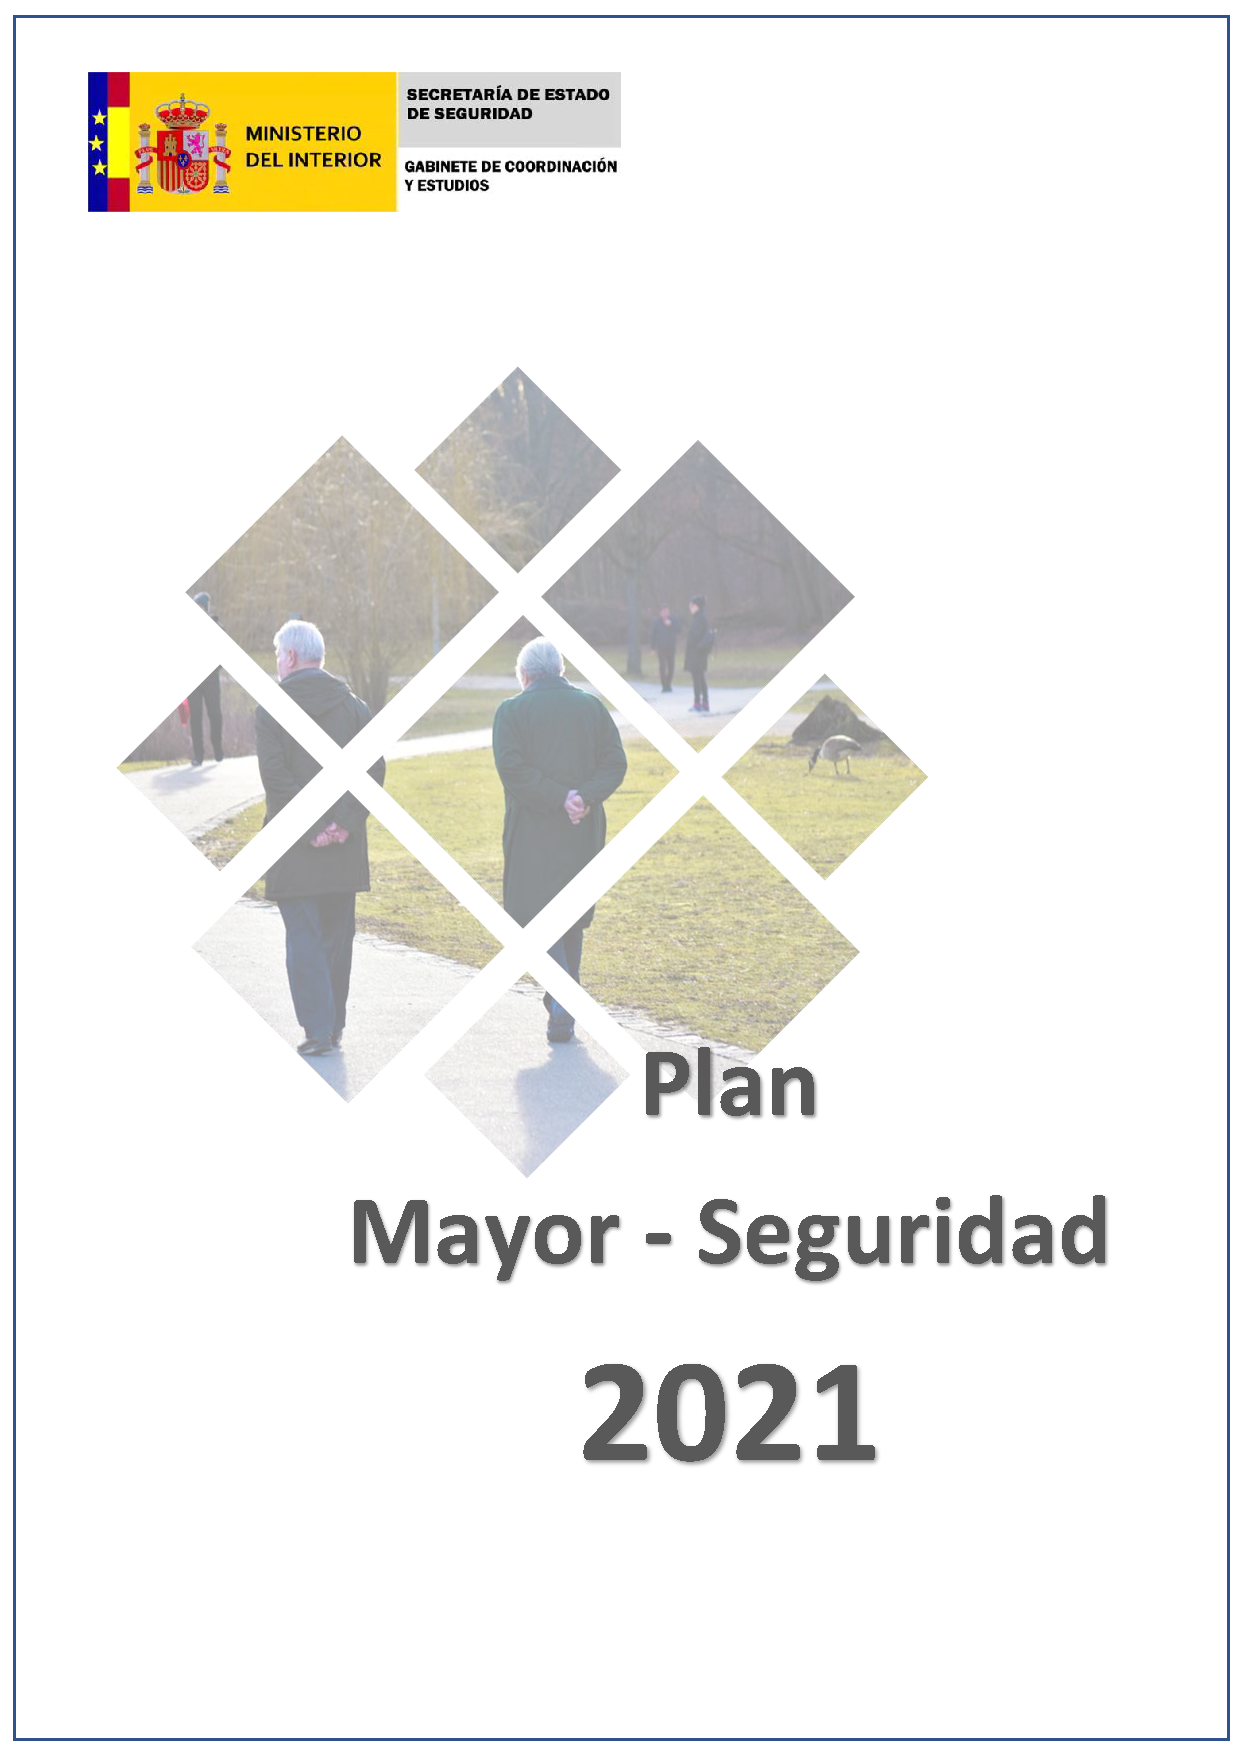 Major Security Plan 2021